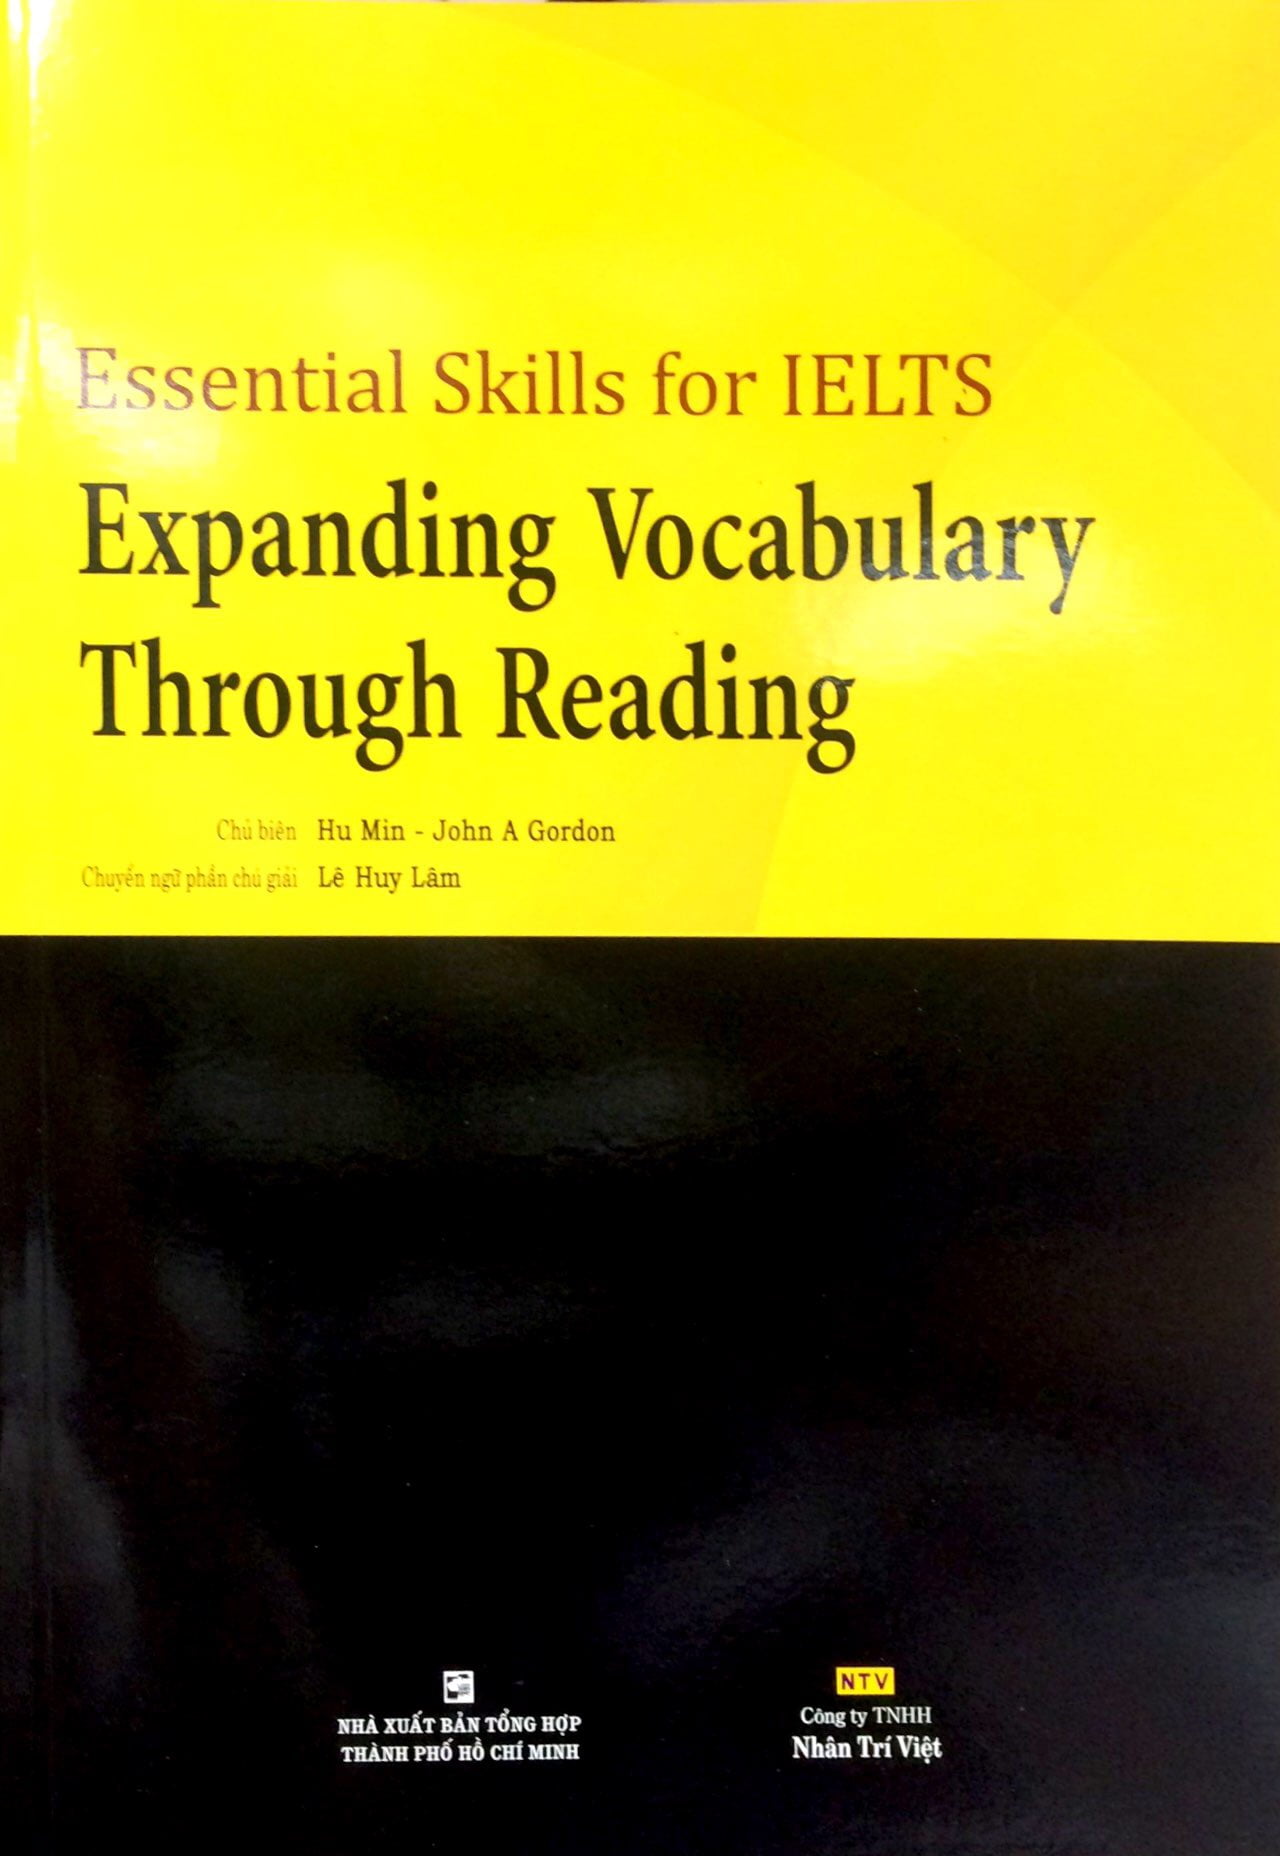 Essential Skills For IELTS - Expanding Vocabulary Through Reading PDF